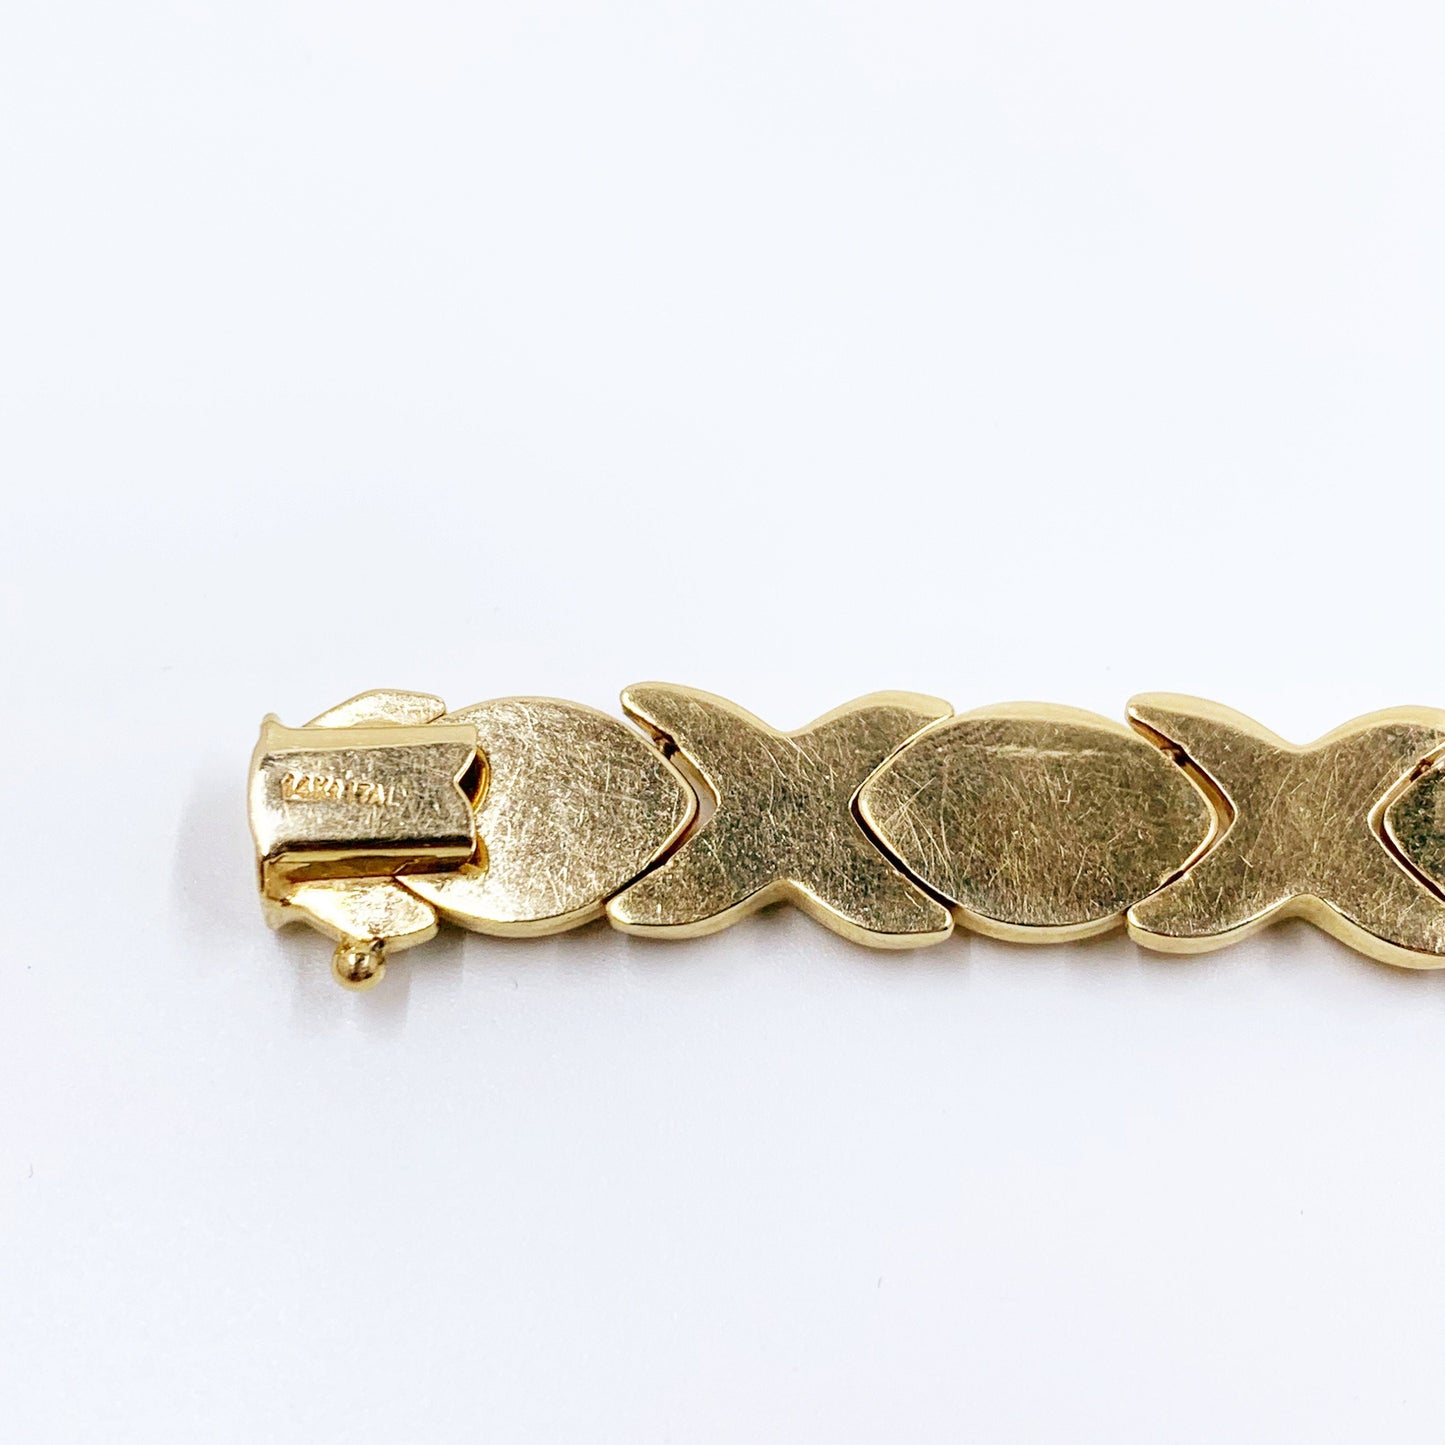 Vintage 14k Italian Gold XO Bracelet | 7.4 inch Gold Bracelet | 9.5 mm Bracelet | 16.6 grams